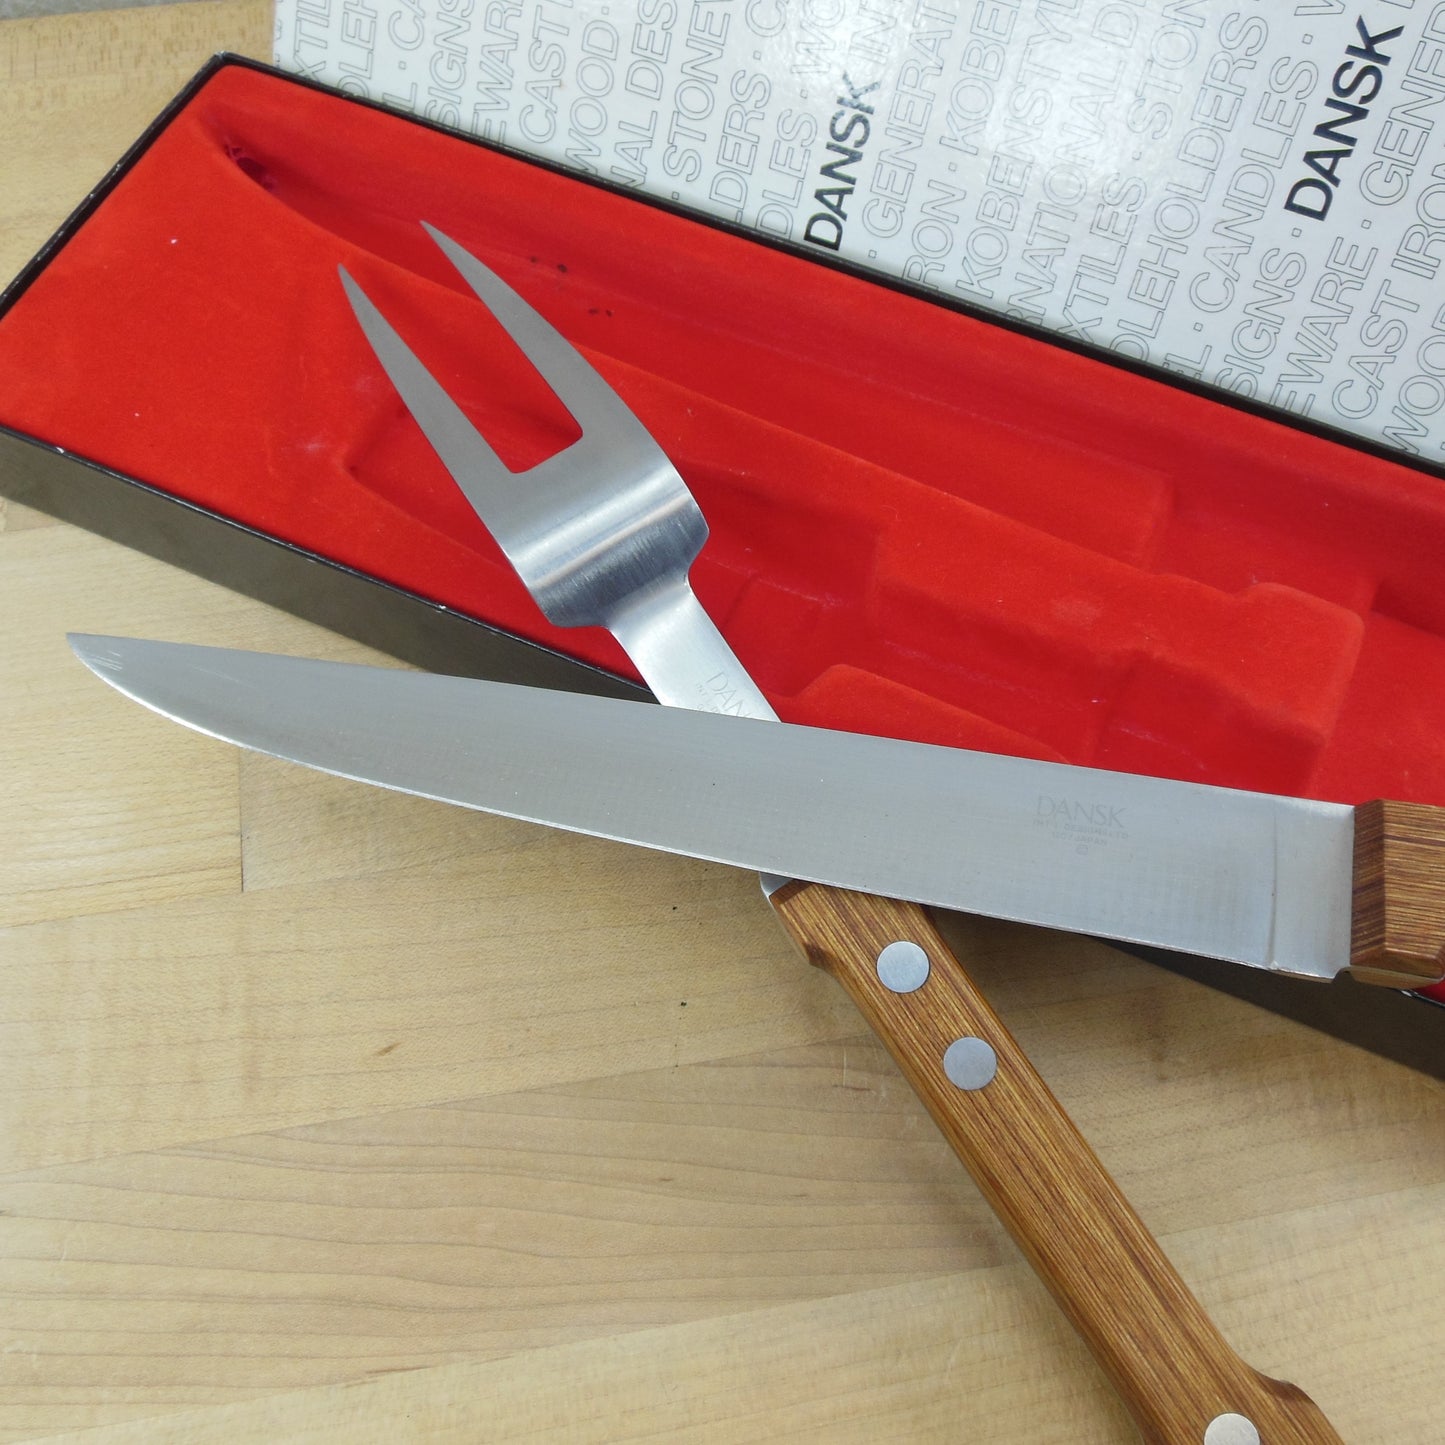 Dansk Japan Gunnar Cyren 8" Stainless Carving Knife Fork Set - Teak Handle Used Original Box